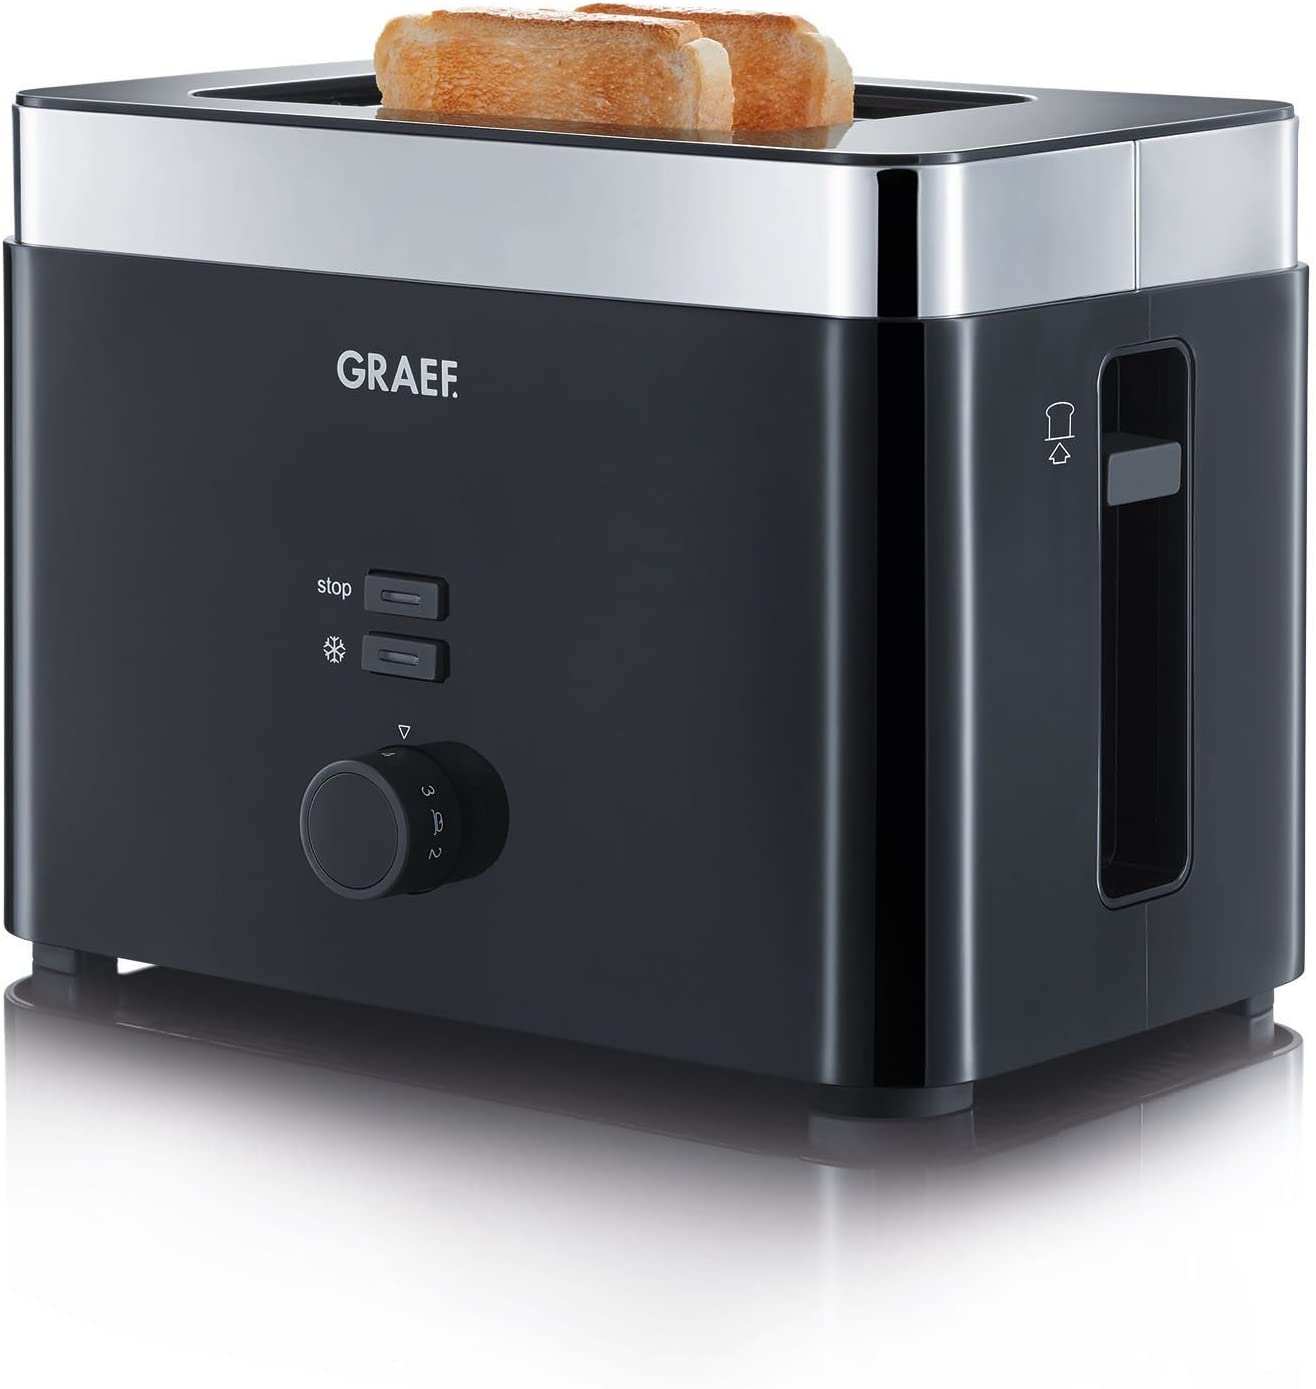 Graef 2 Slice Toaster Black- TO62